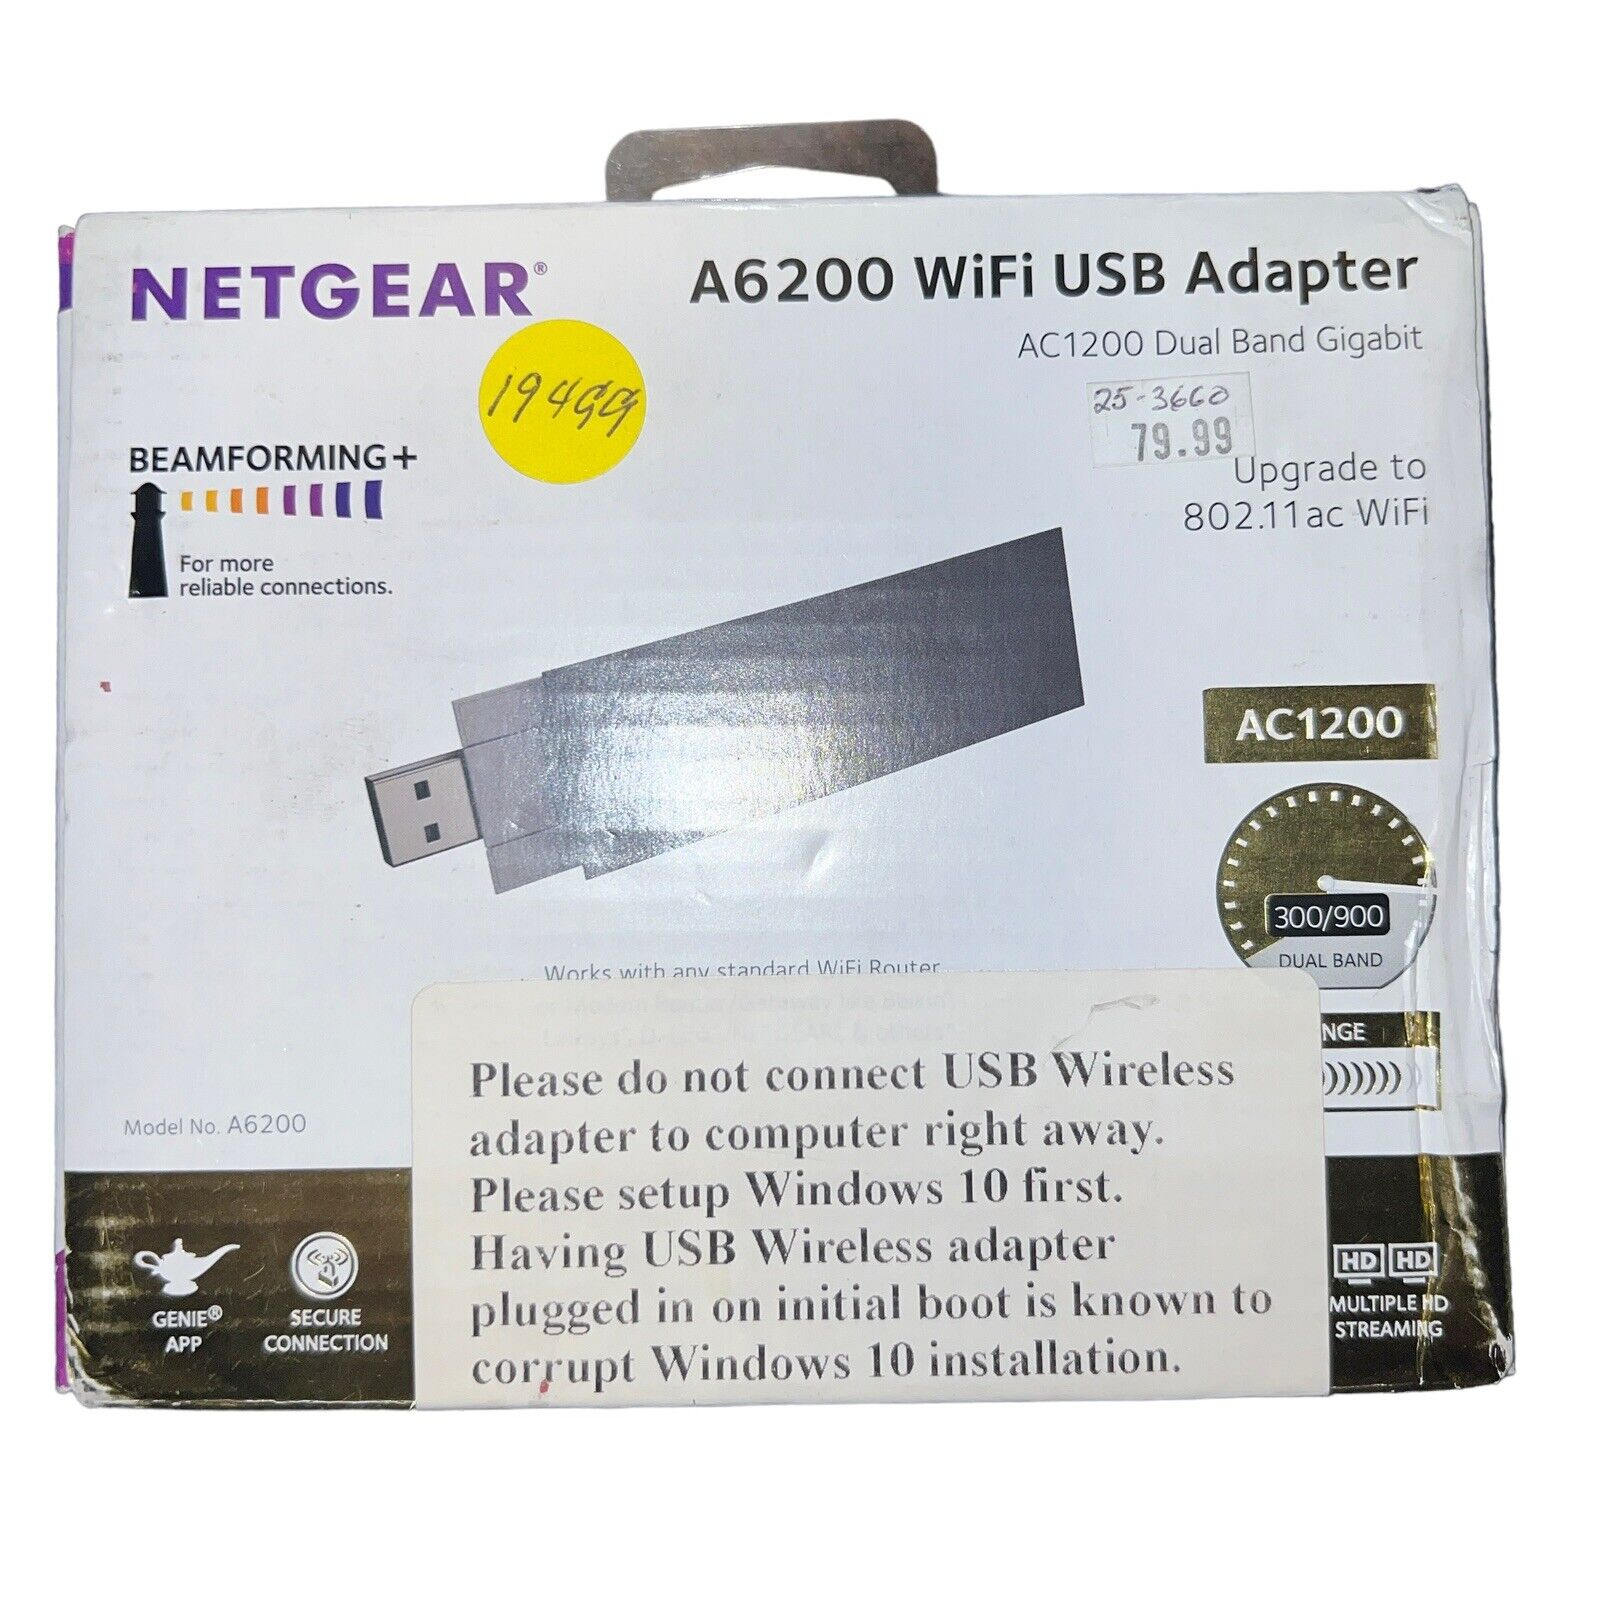 Netgear A6200 WiFi USB Adapter AC1200 Dual Band Gigabit Model A6200